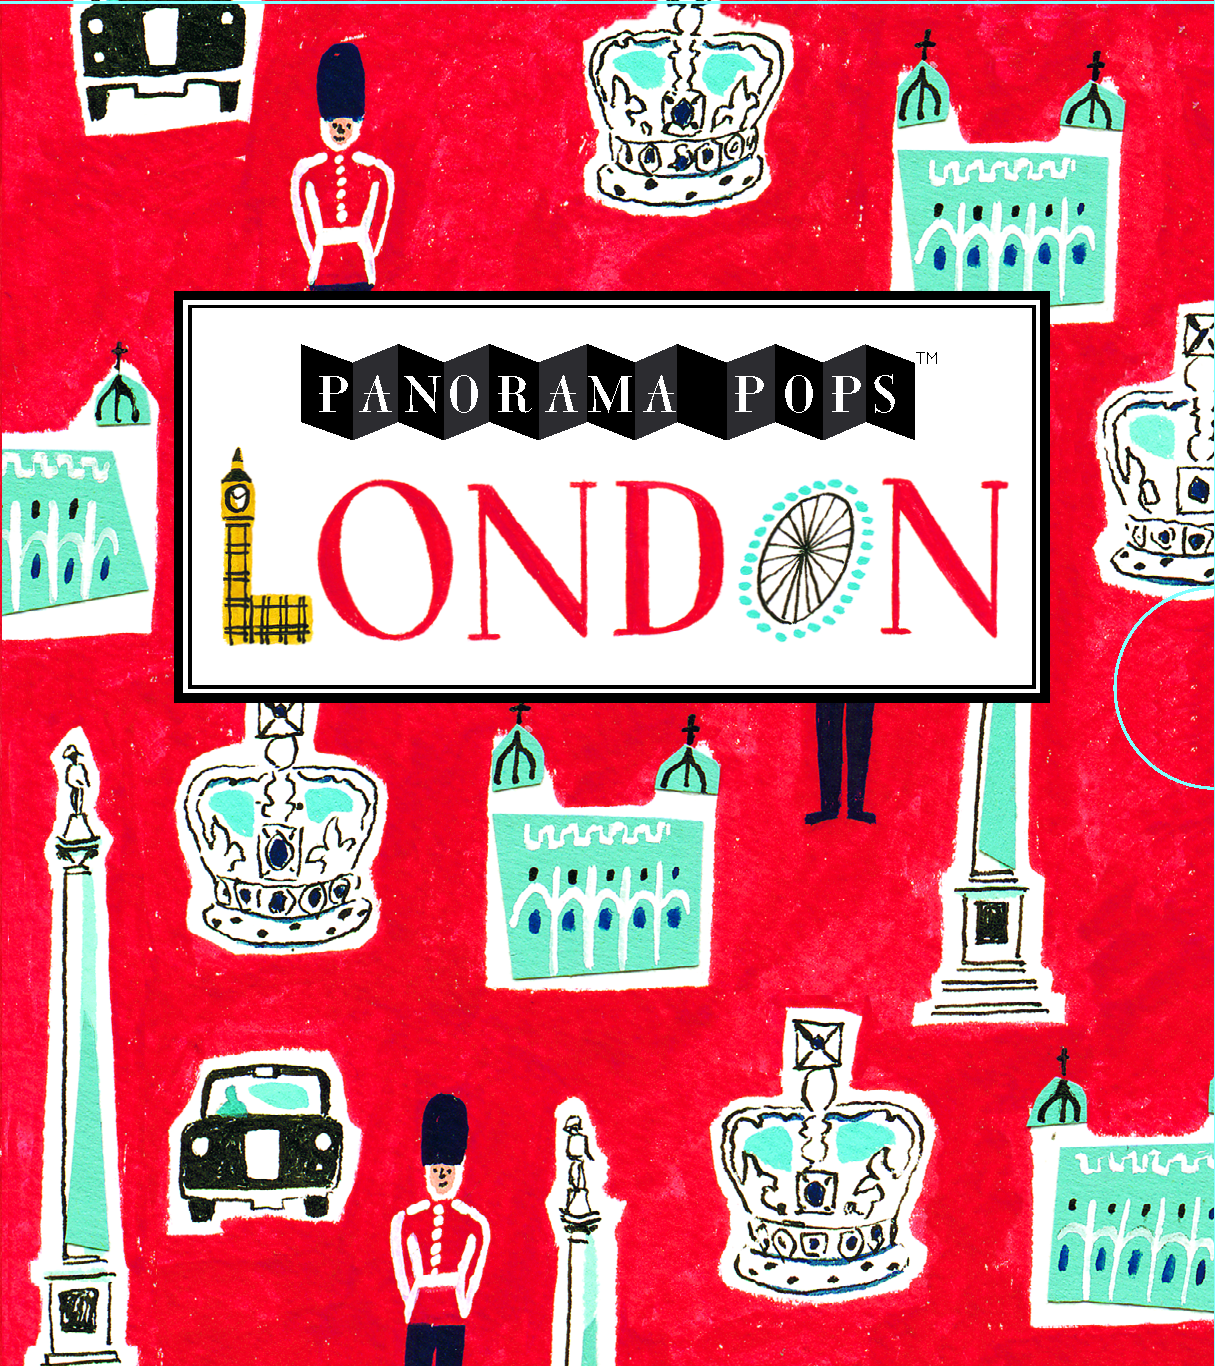 London-Panorama-Pops